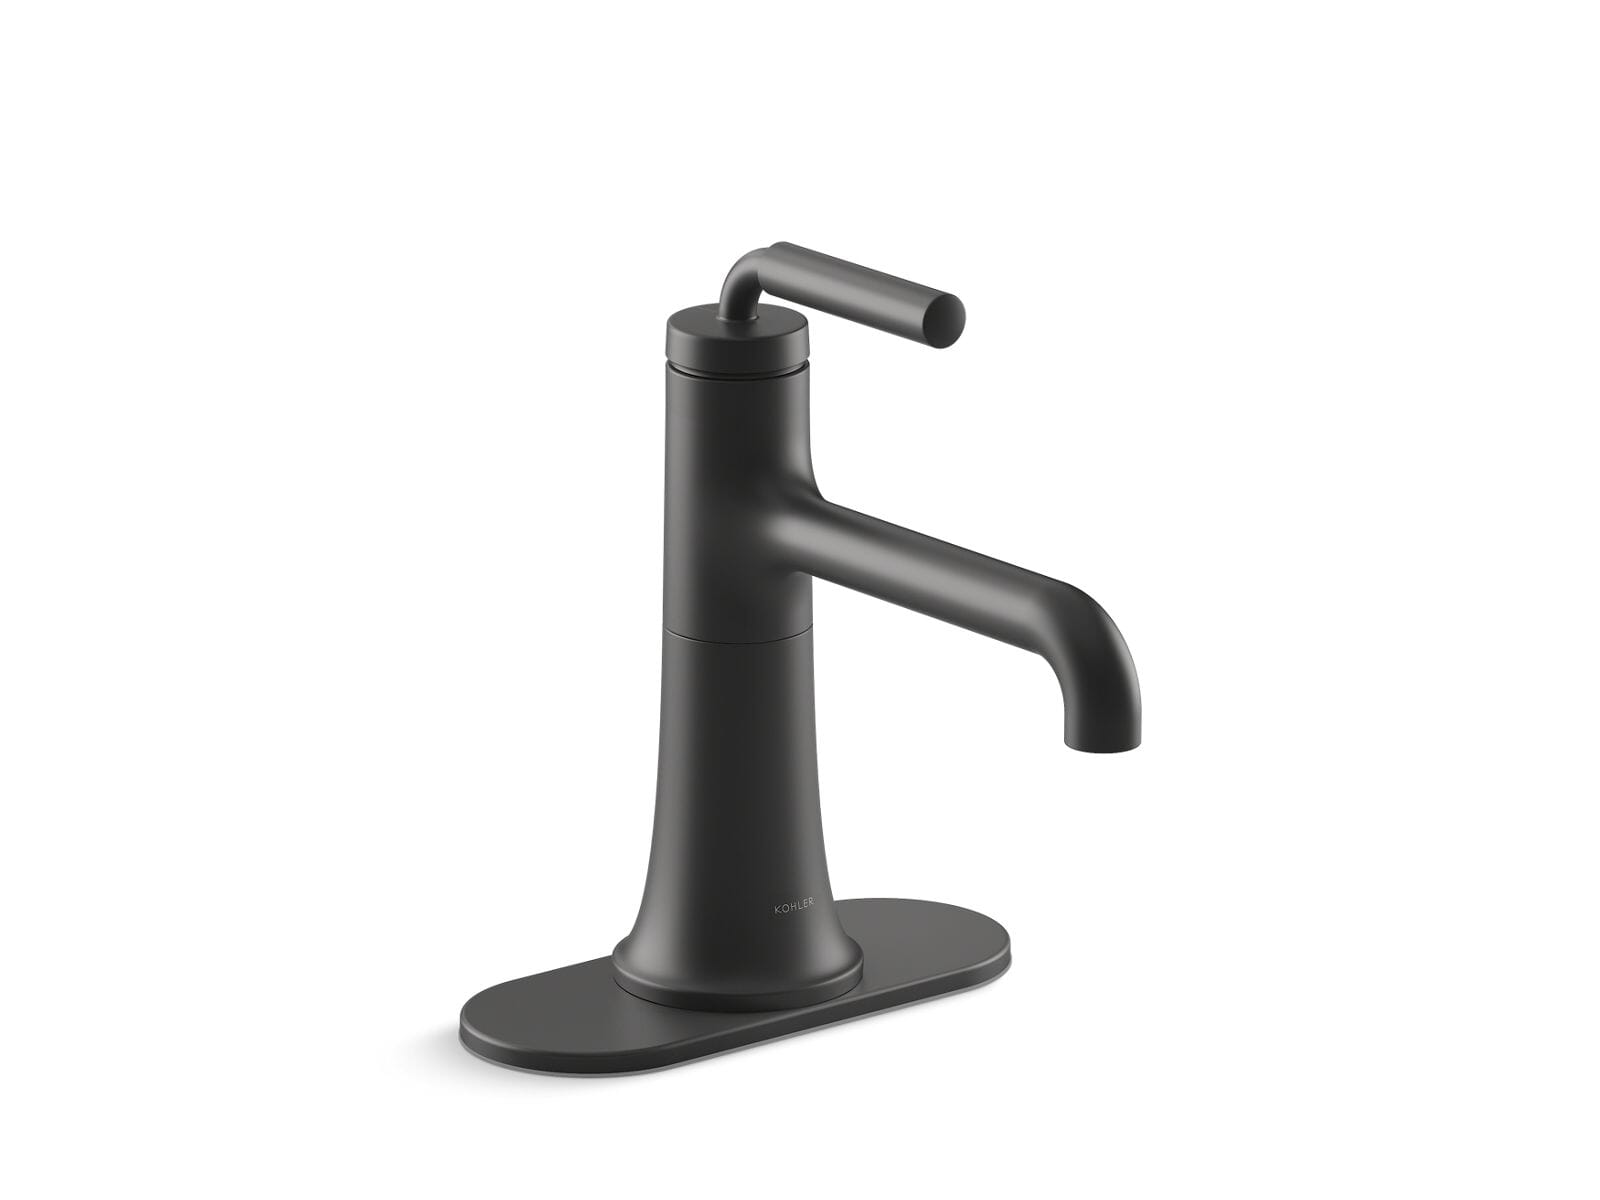 Tone™ Single-handle bathroom sink faucet, 0.5 gpm